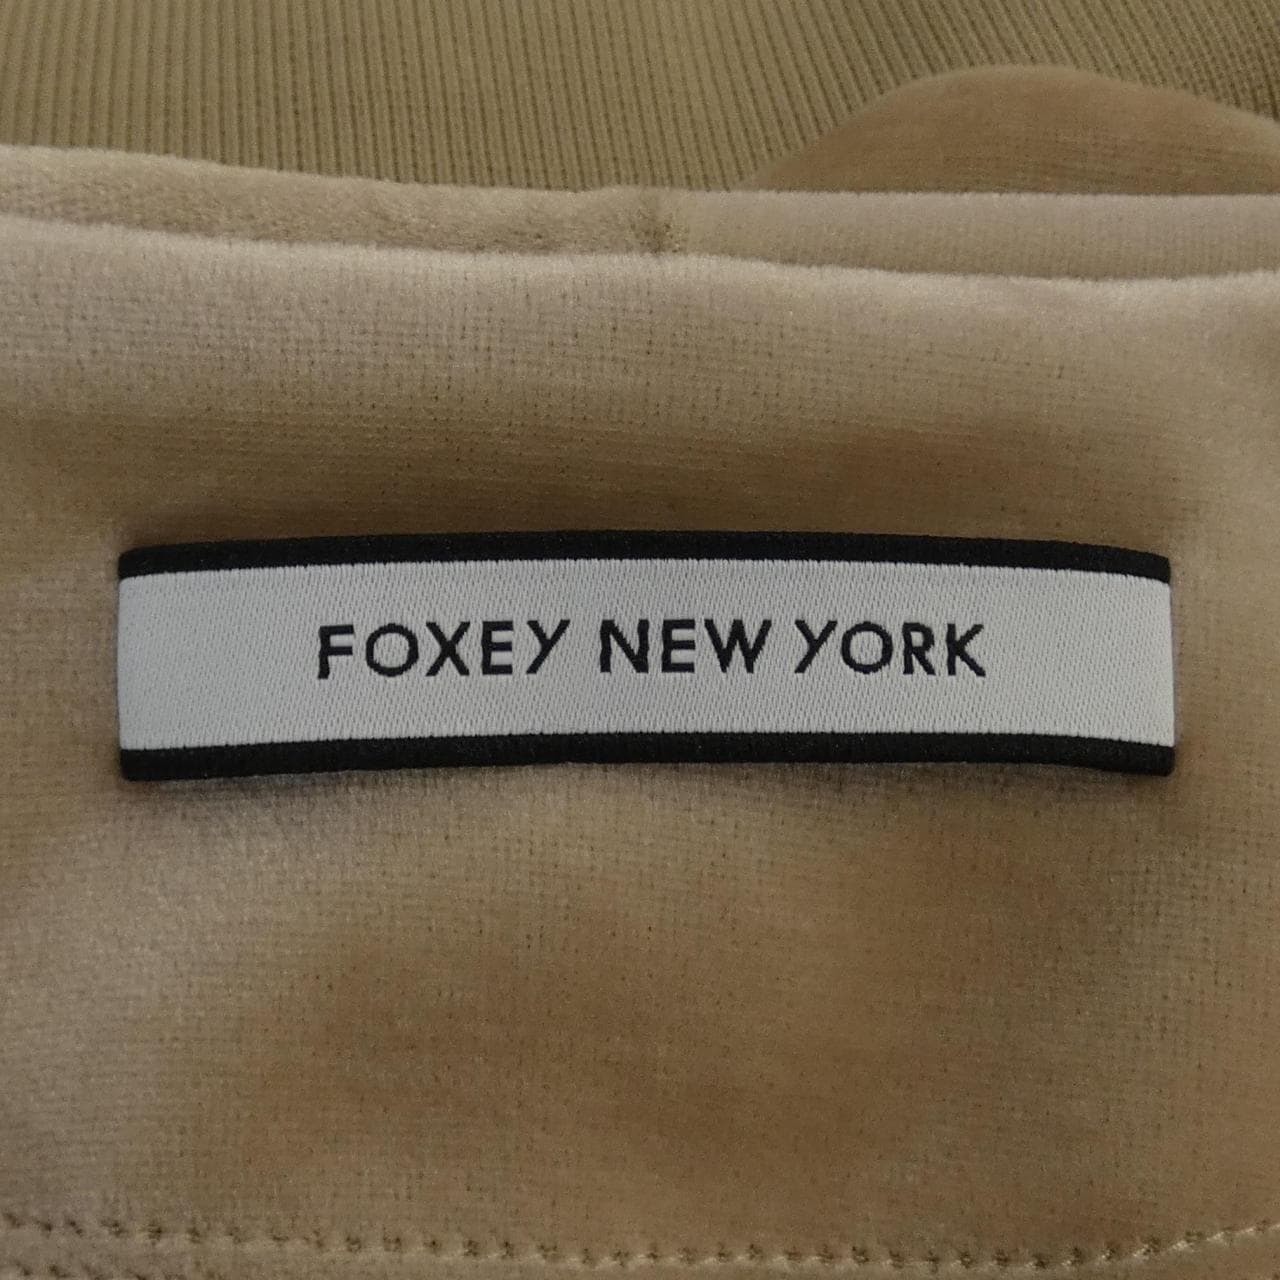 KOMEHYO |FOXEY NEW YORK PARKER |Foxy New York|女装|上衣| PARKER